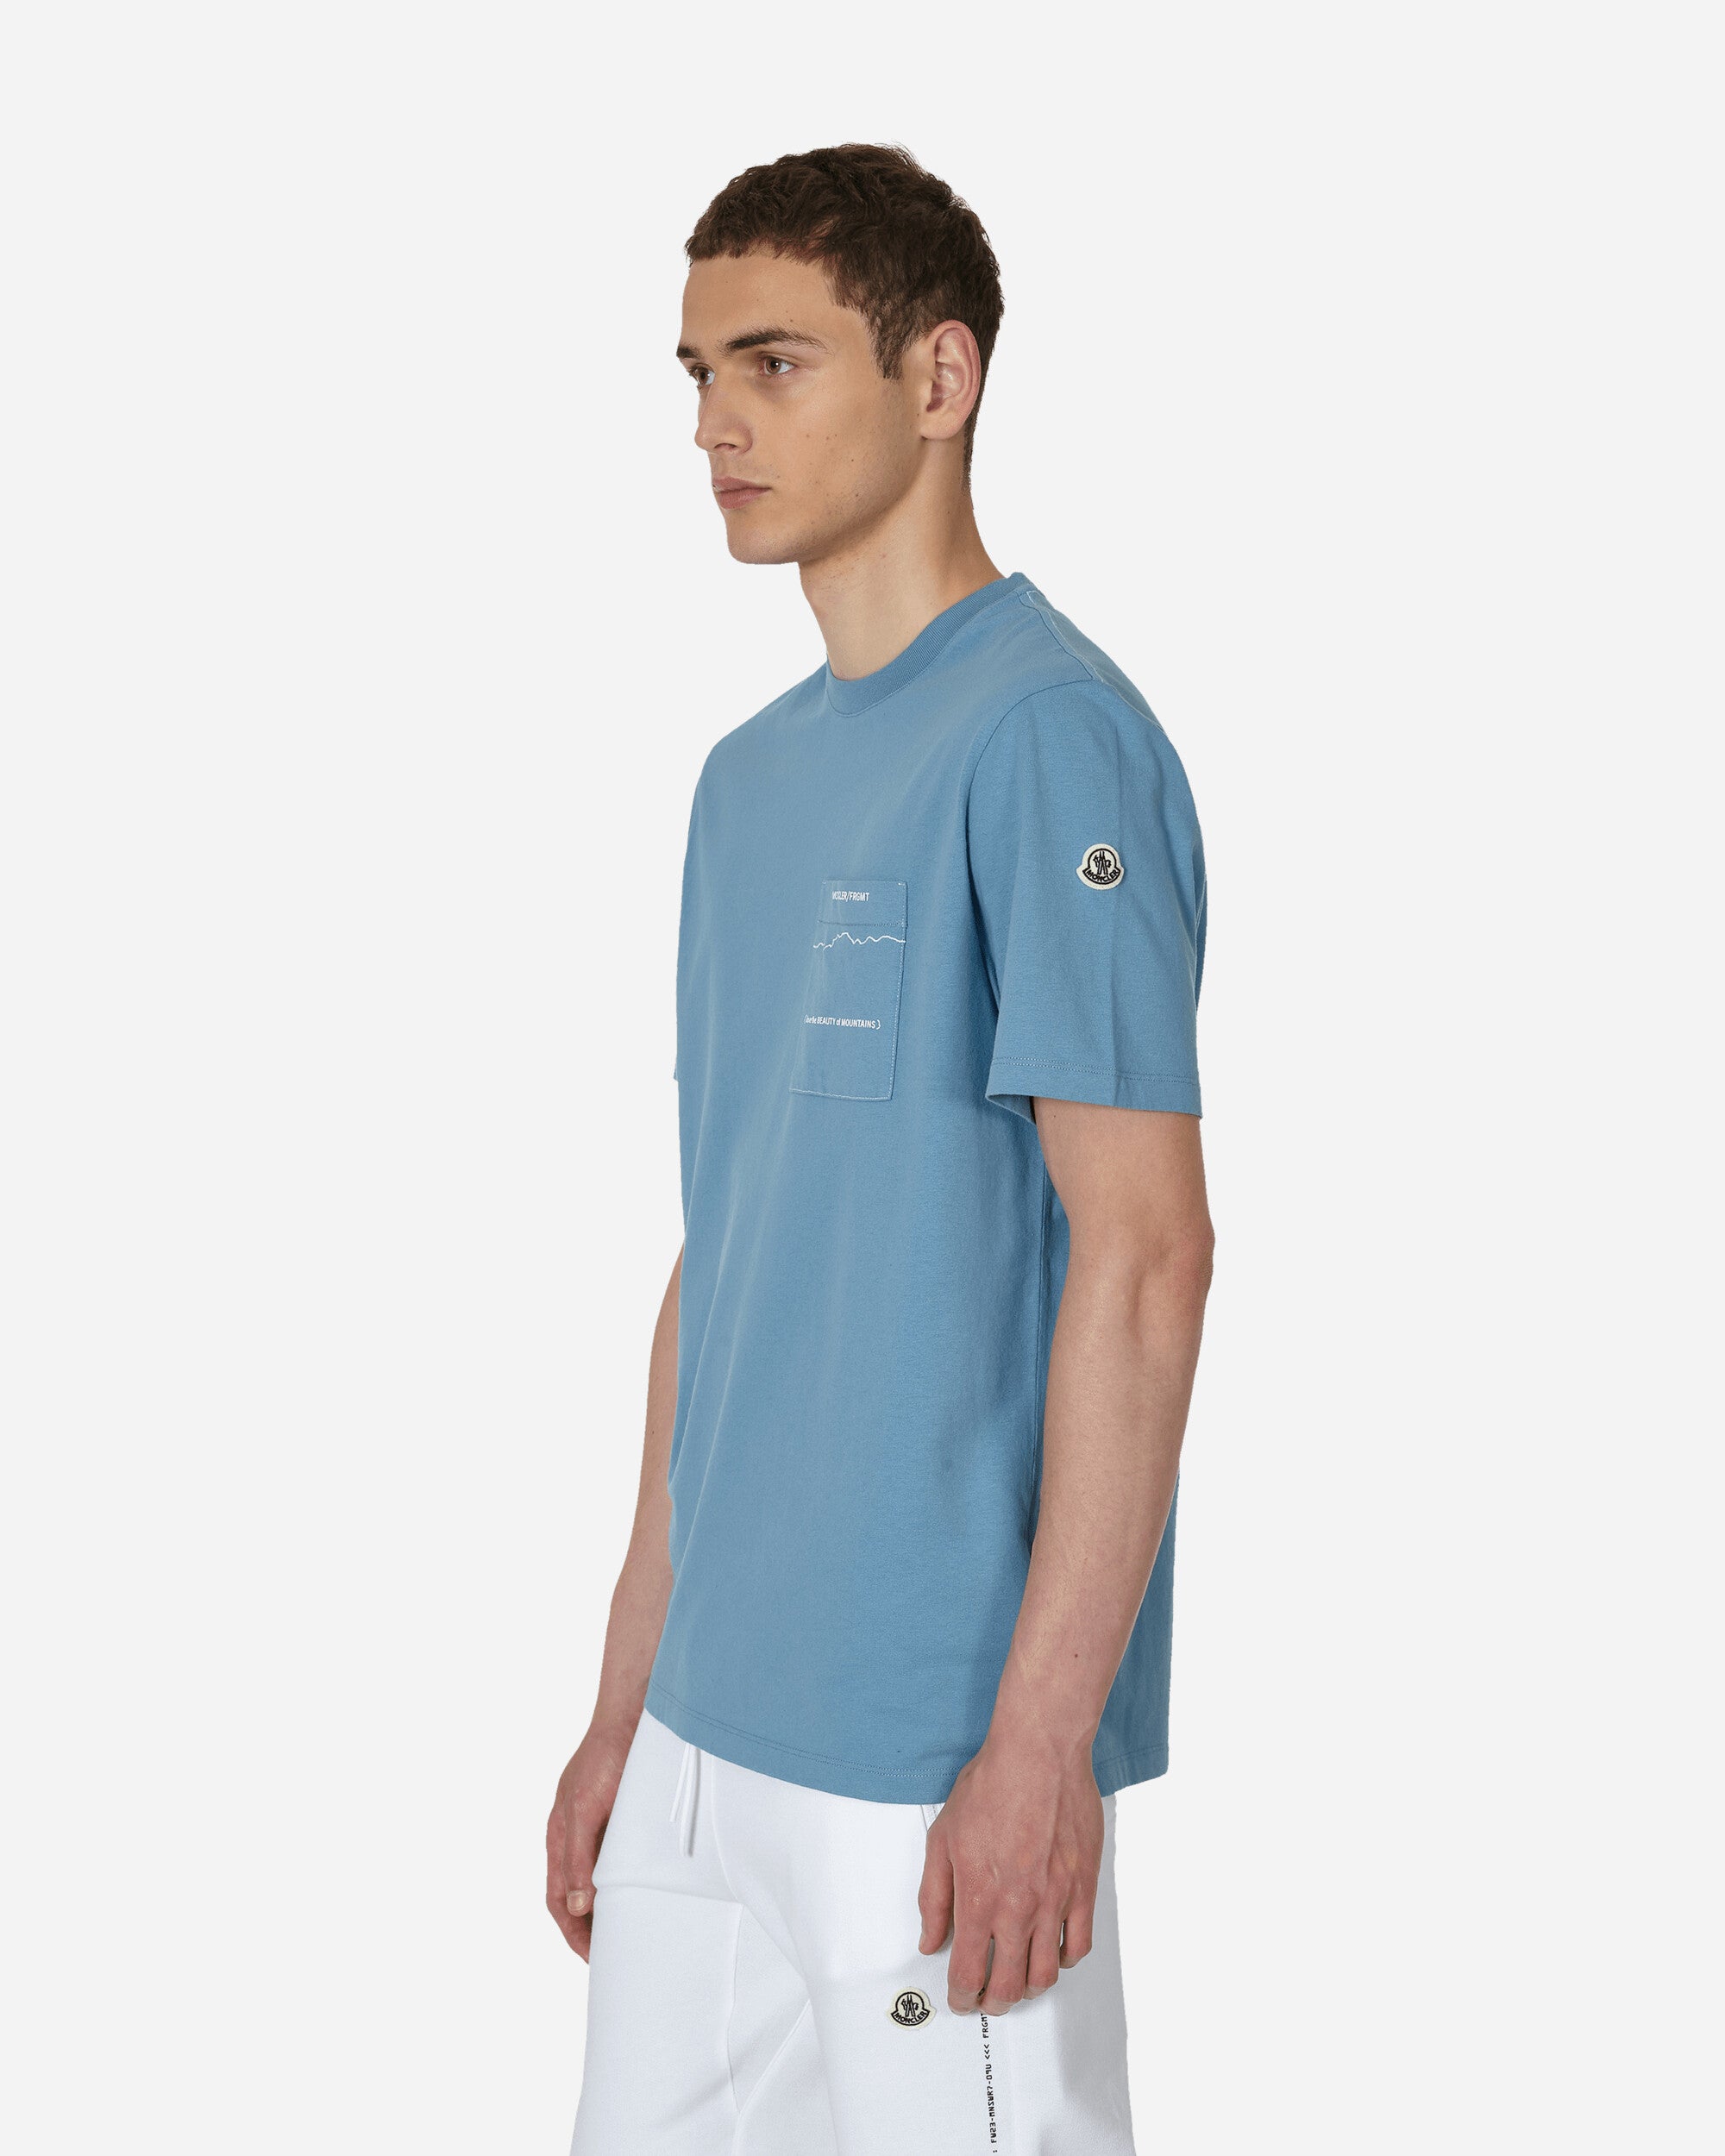 Moncler Genius T-Shirt X Fragment Blue T-Shirts Shortsleeve 8C00005M3265 710